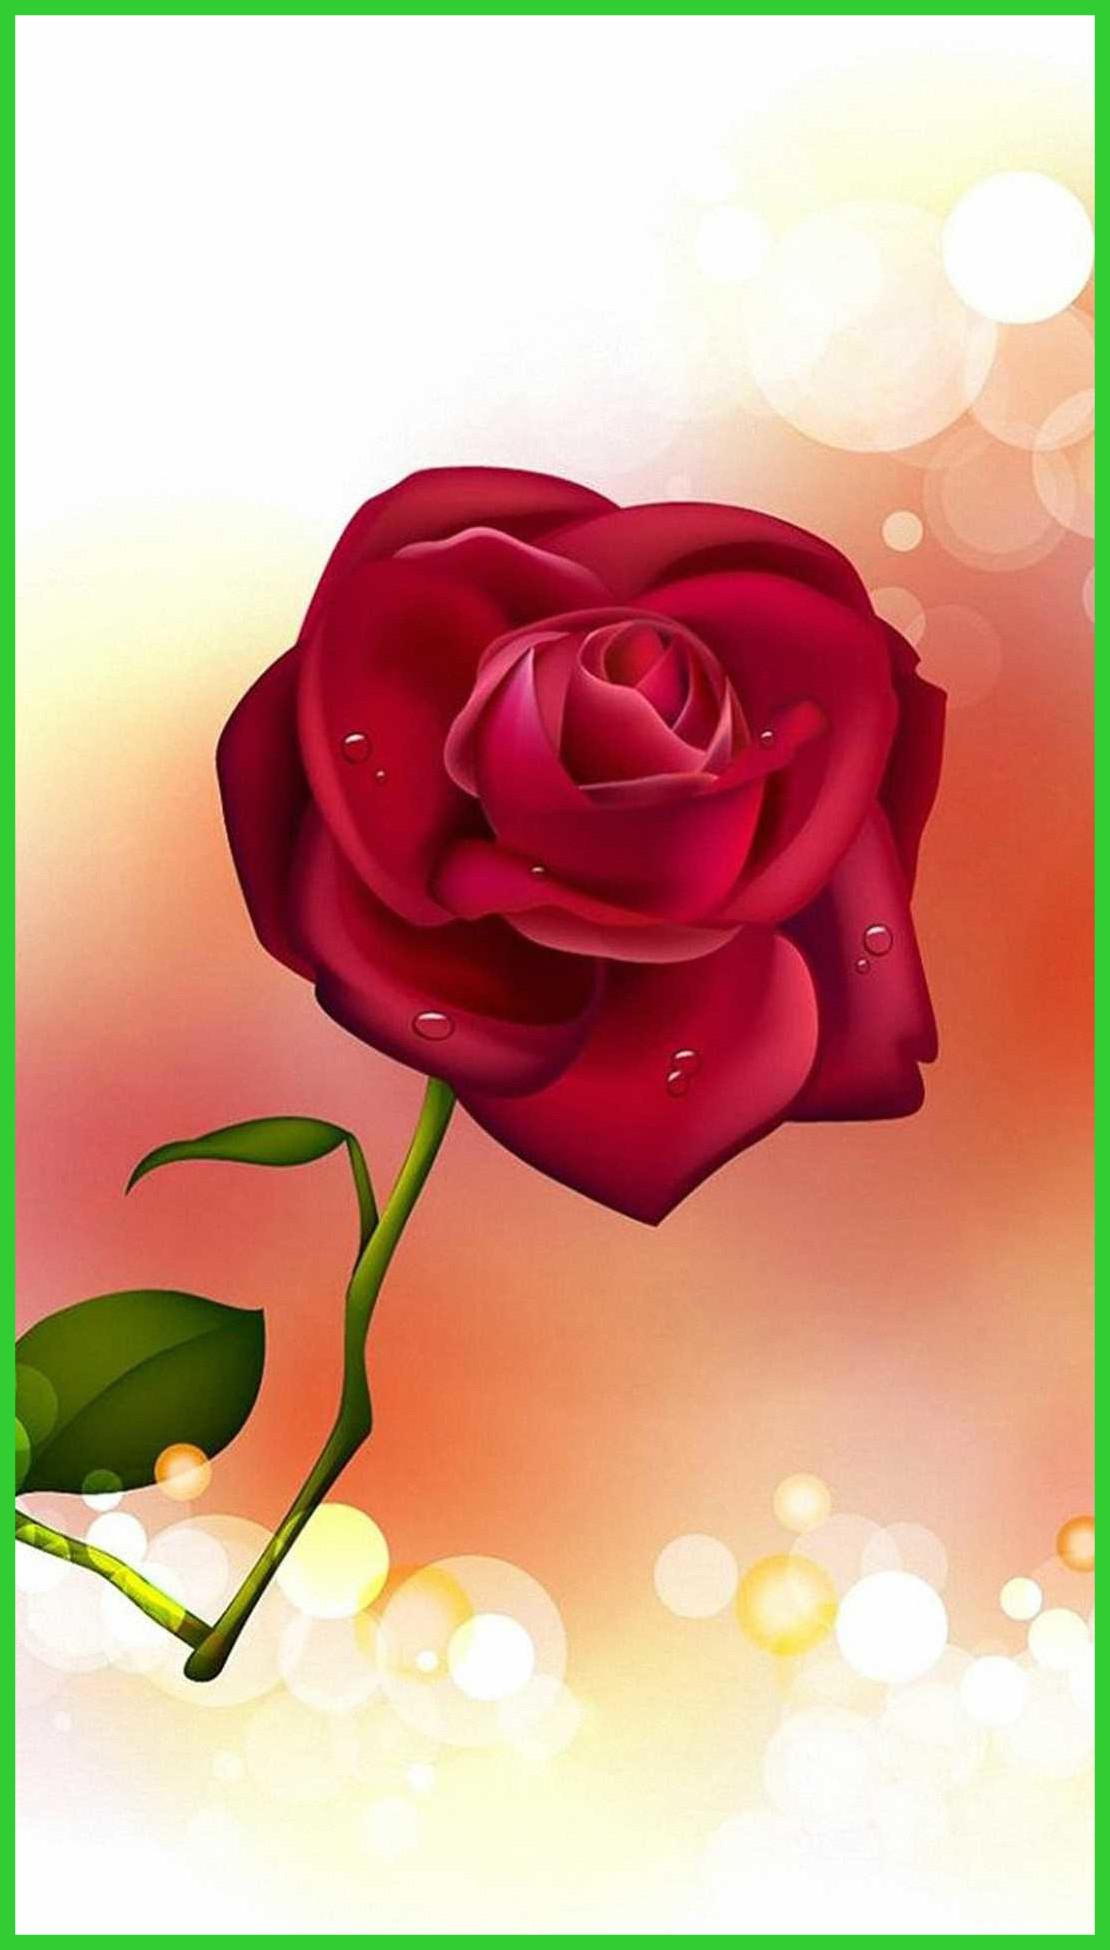 Appealing Rose Flower HD Wallpaper Full Pics Of iPhone For Mobile P